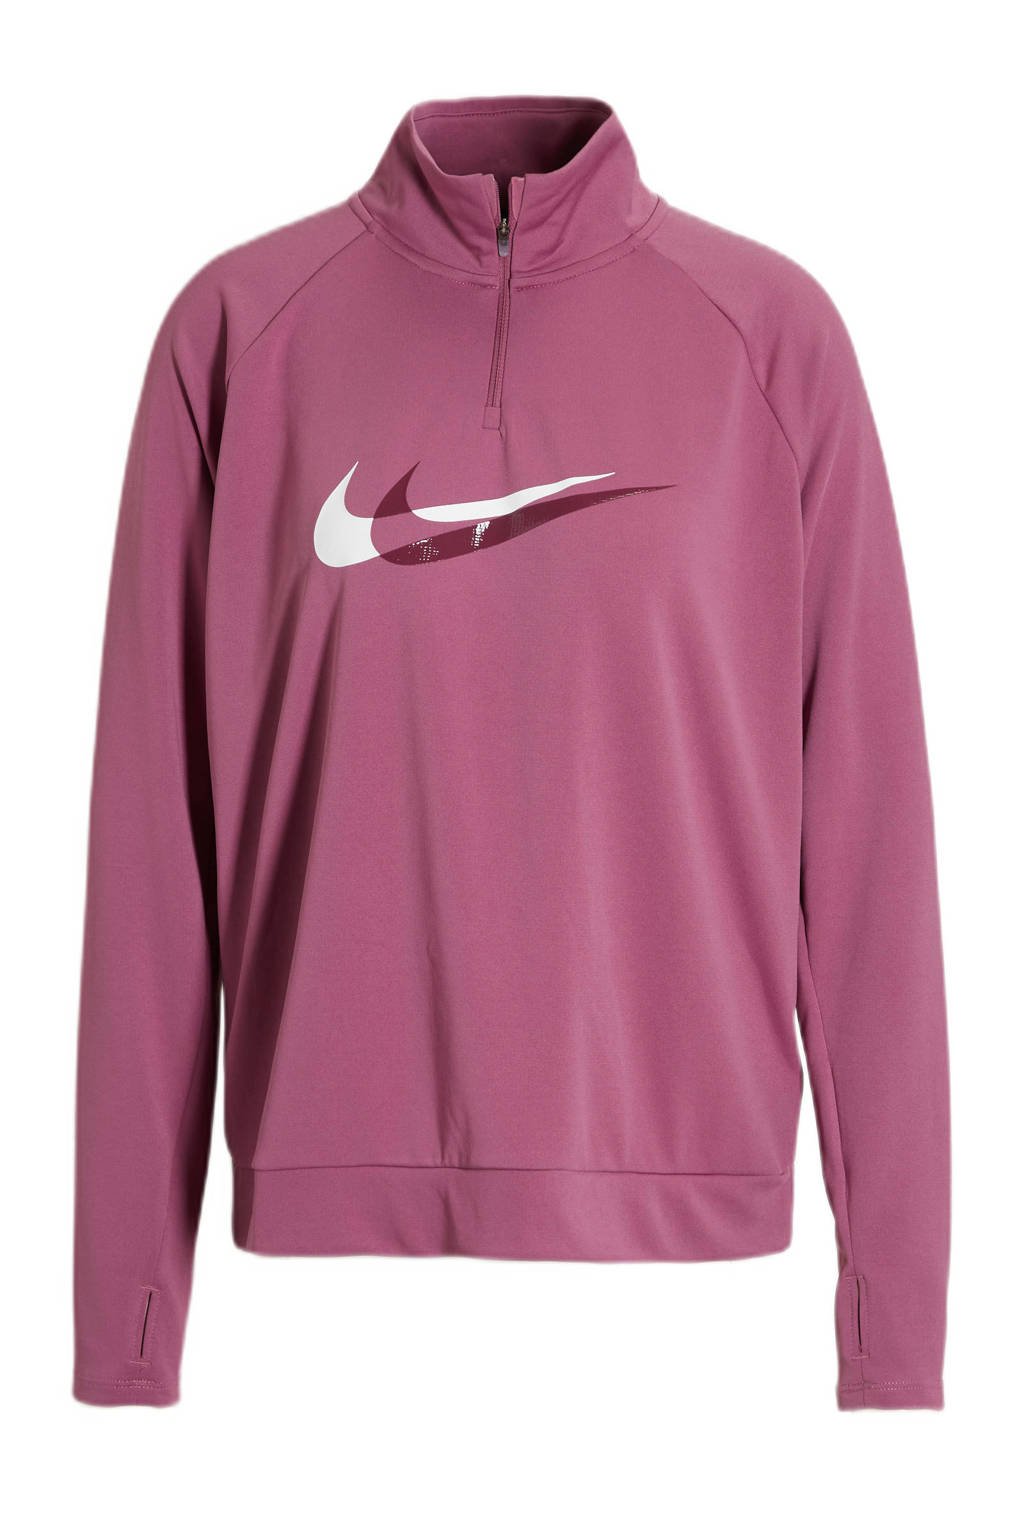 Nike hardloopshirt paars